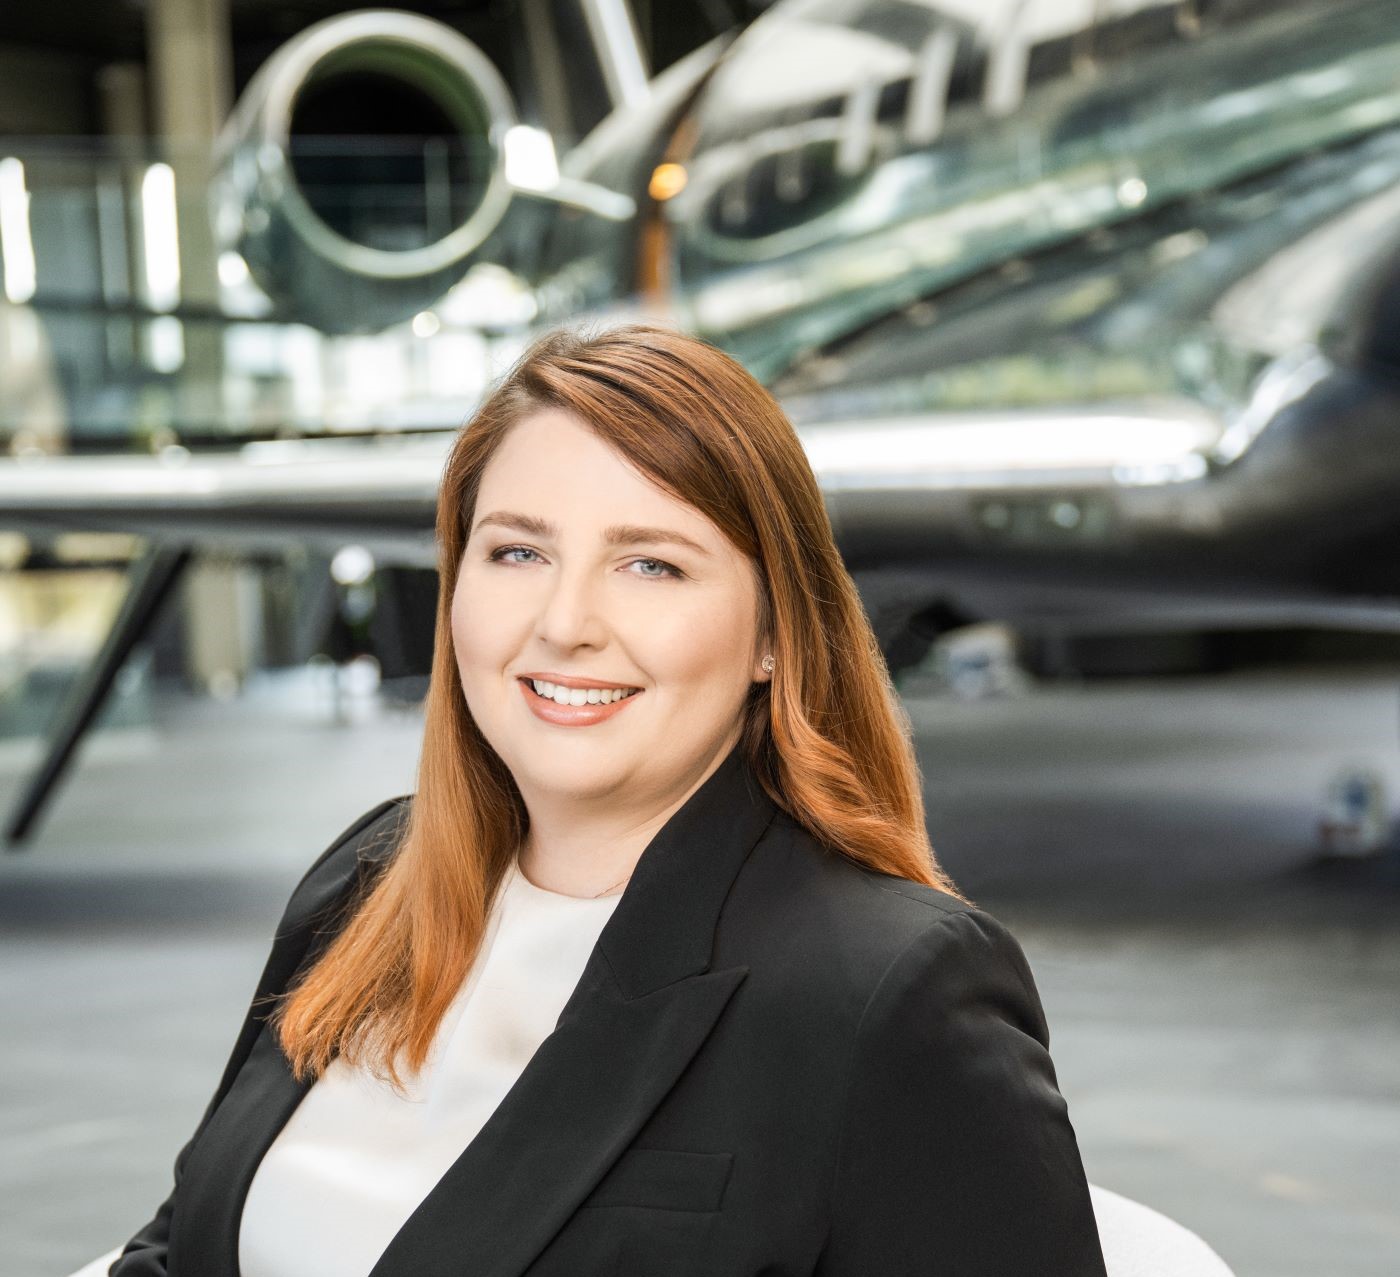 KlasJet’s Head of HR on attracting top aviation specialists amidst talent shortage